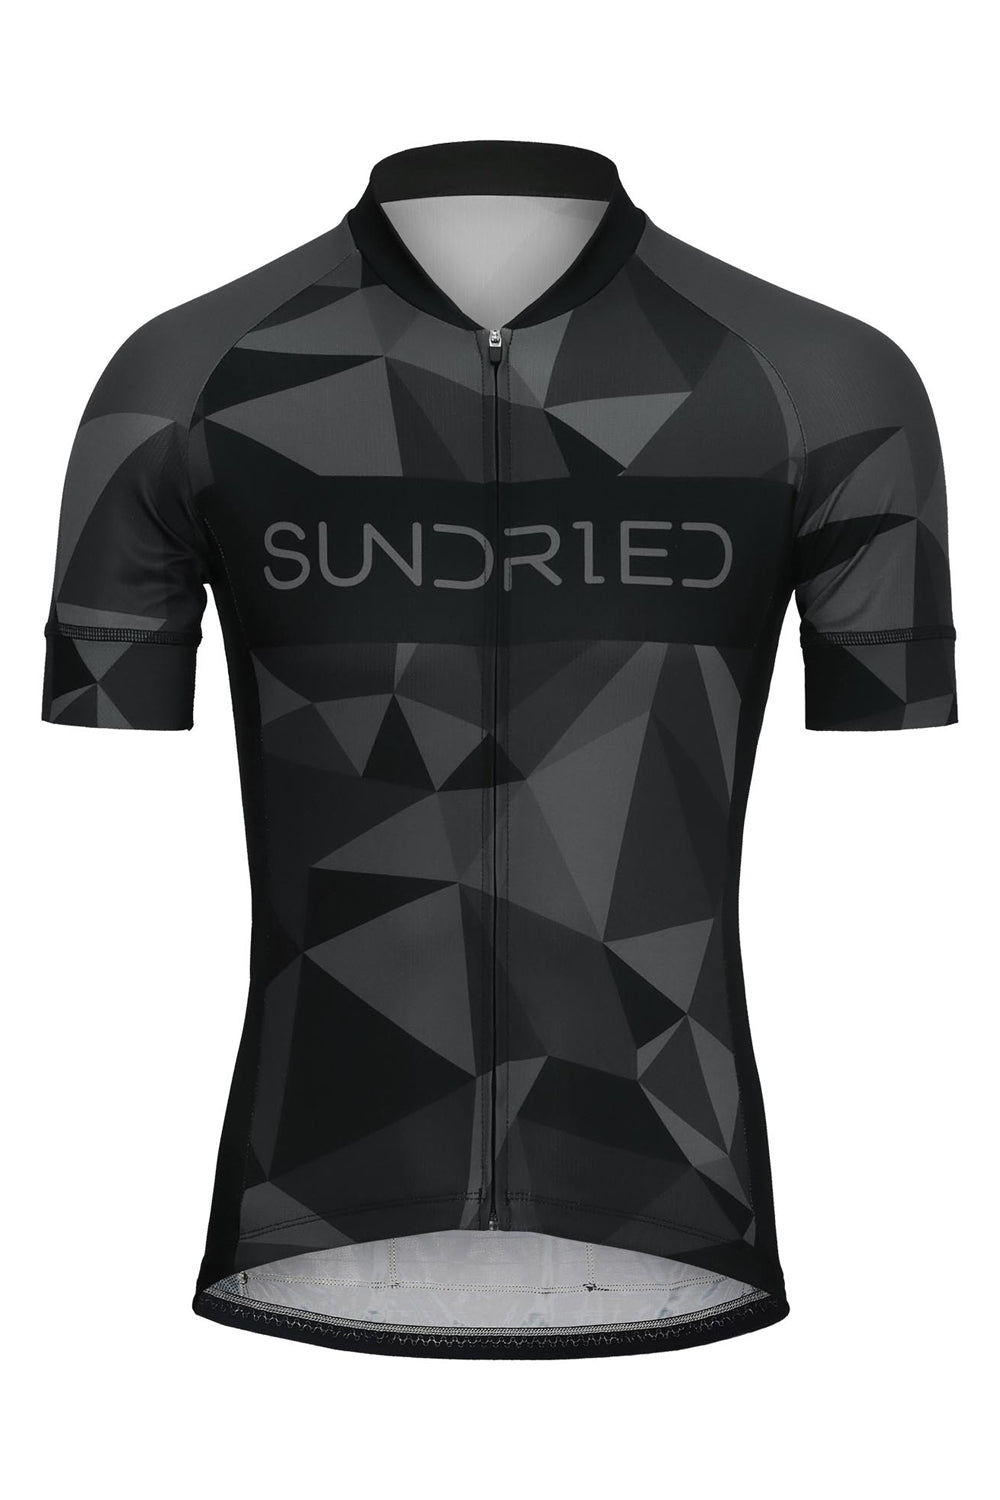 Sundried Geometric Men's Short Sleeve Training Jersey Short Sleeve Jersey XL Black SD0458 XL Black Activewear